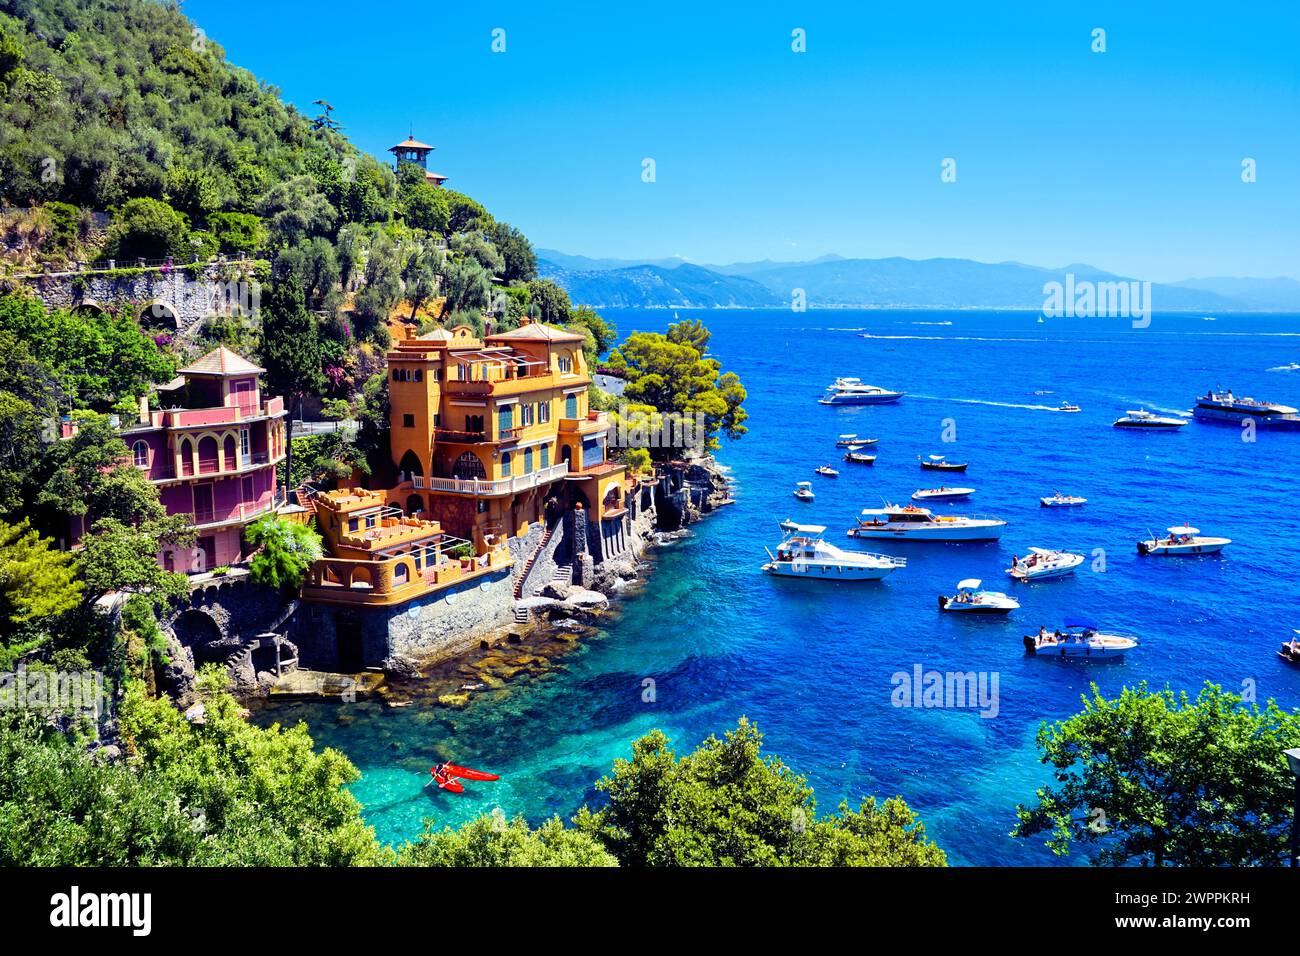 Luxuriöse Villen am Meer in Portofino, Italien. Malerische Bucht mit Booten im Mittelmeer. Stockfoto